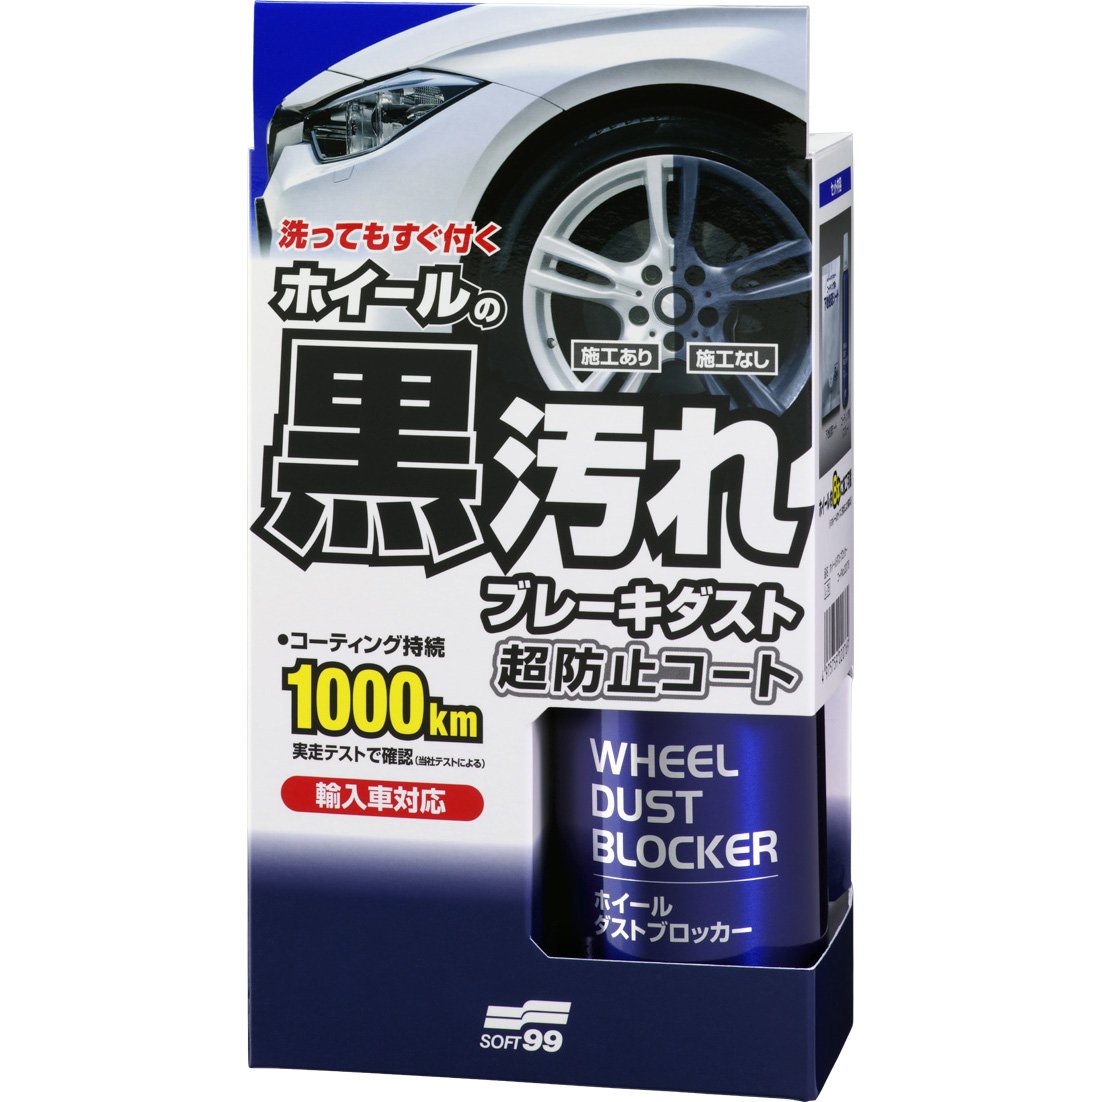 Wheel Dust Blocker - 200ml kit